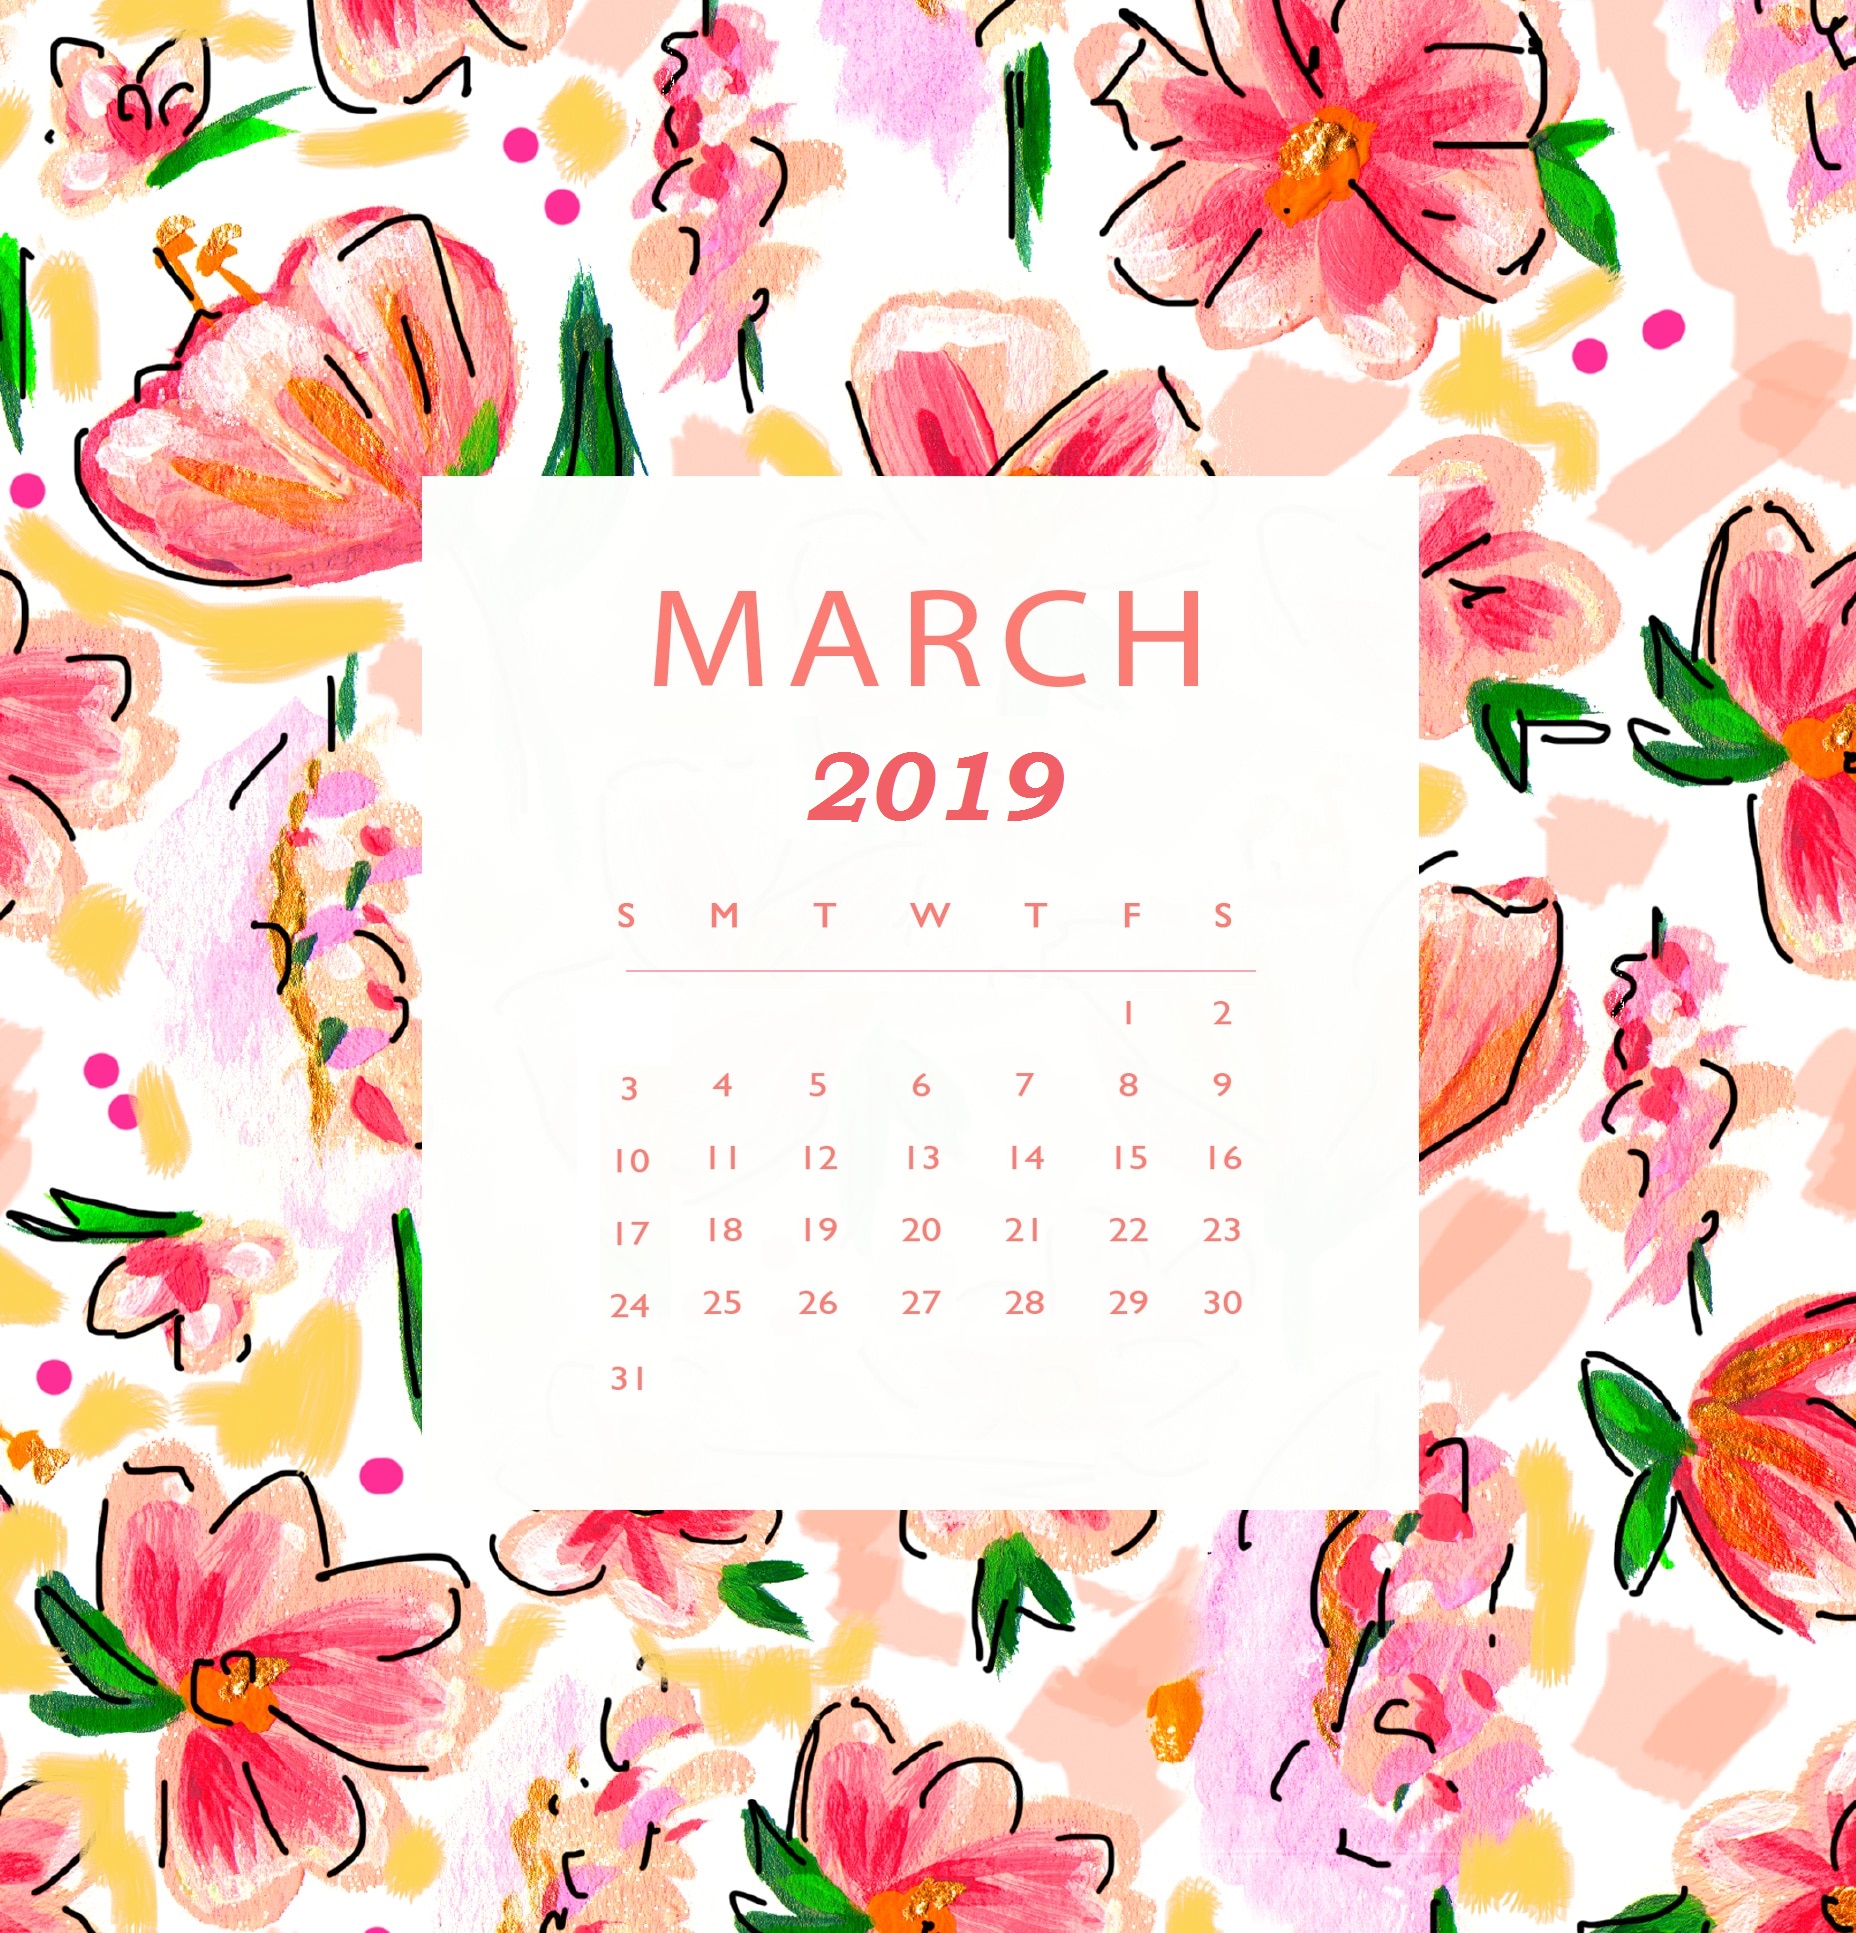 Free March 2019 Hd Calendar Wallpaper - March Calendar Wallpaper 2019 - HD Wallpaper 